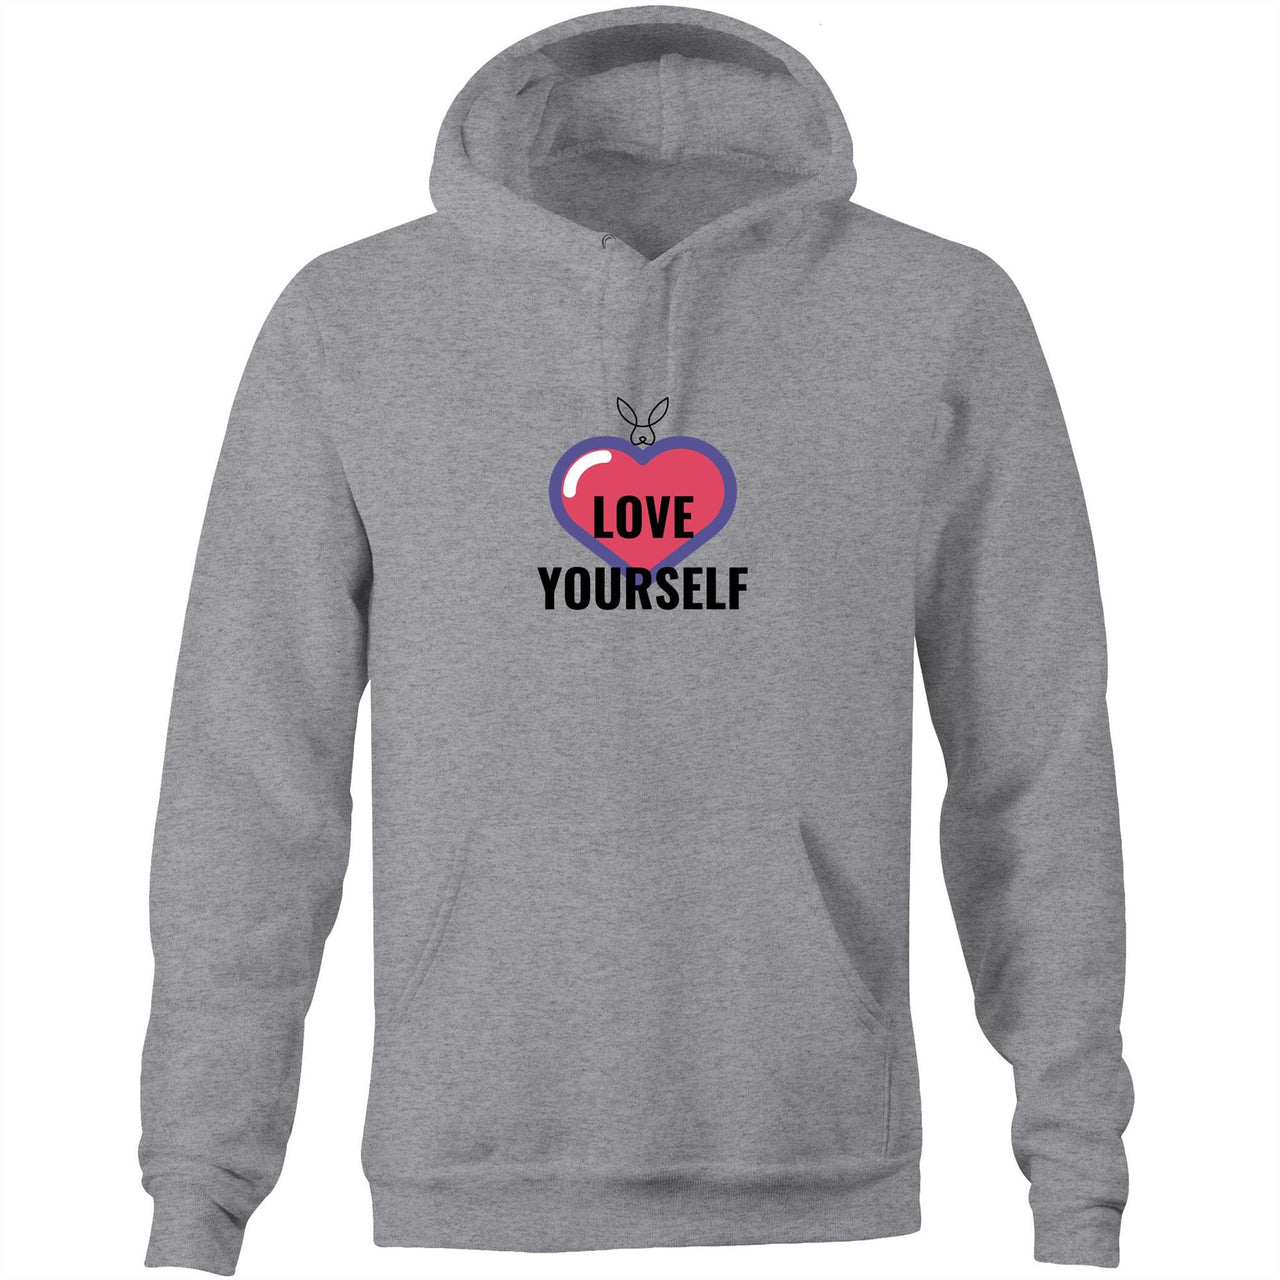 Love Yourself Pocket Hoodie Sweatshirt. unisex mens womens grey